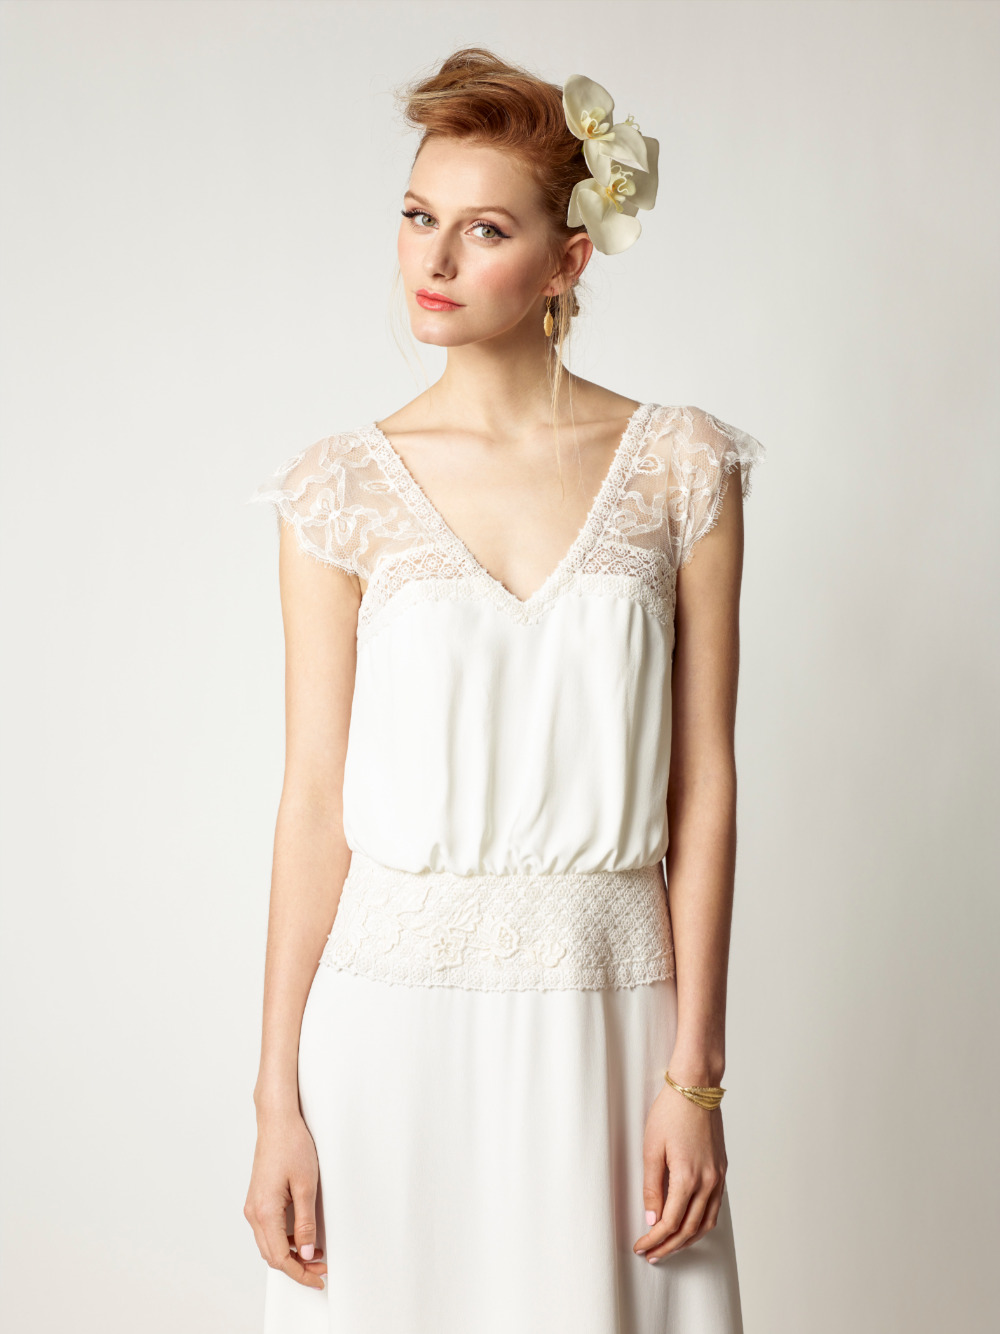 bohemian-chic-styling-wedding-dresses